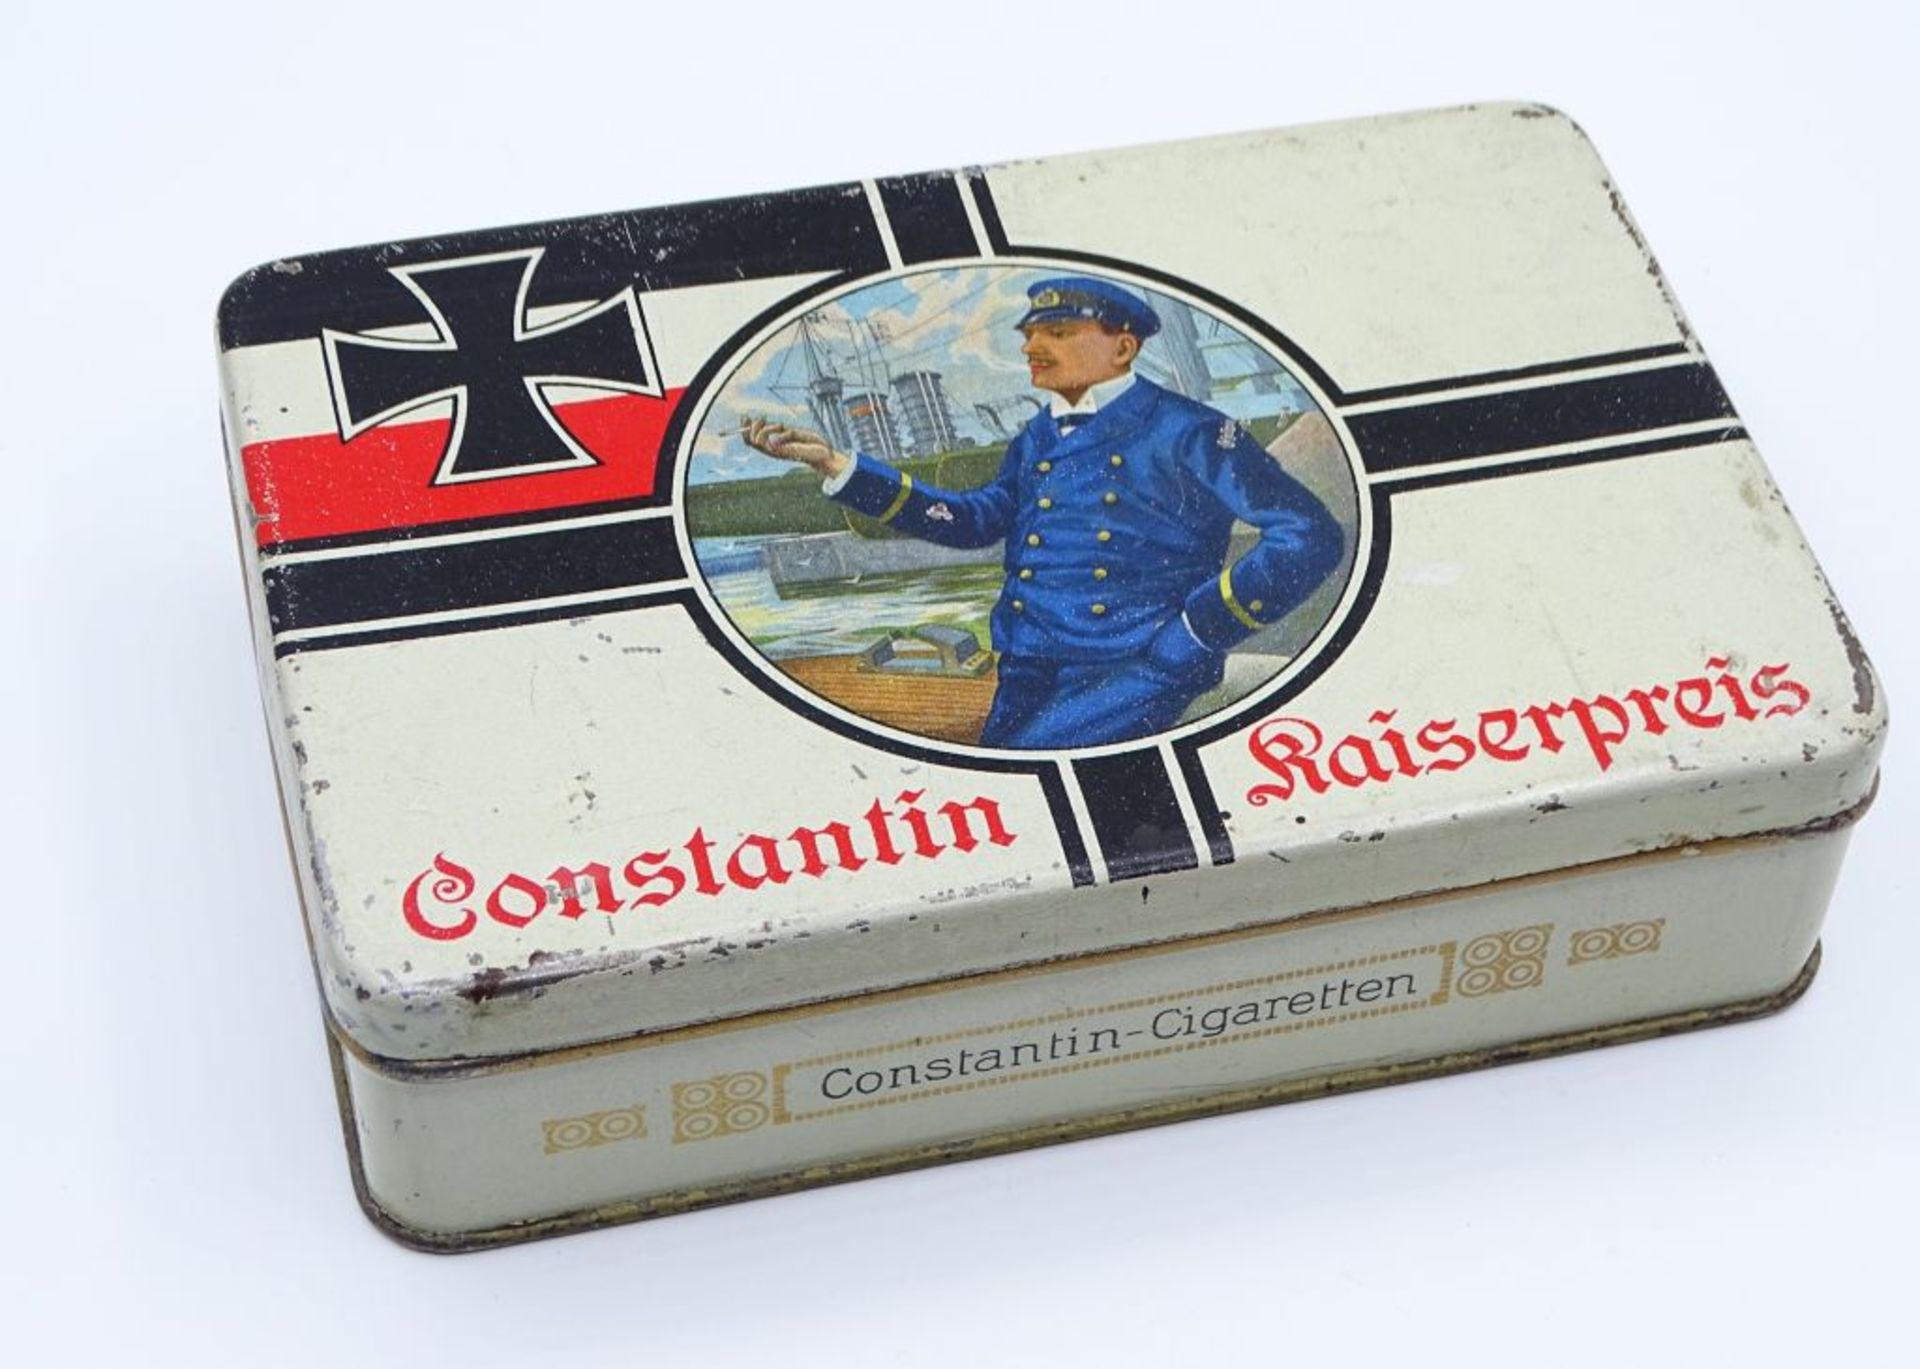 Blechdose, 1. Weltkrieg,Constantin Kaiserpreis Cigaretten, 10x15cm- - -22.61 % buyer's premium on